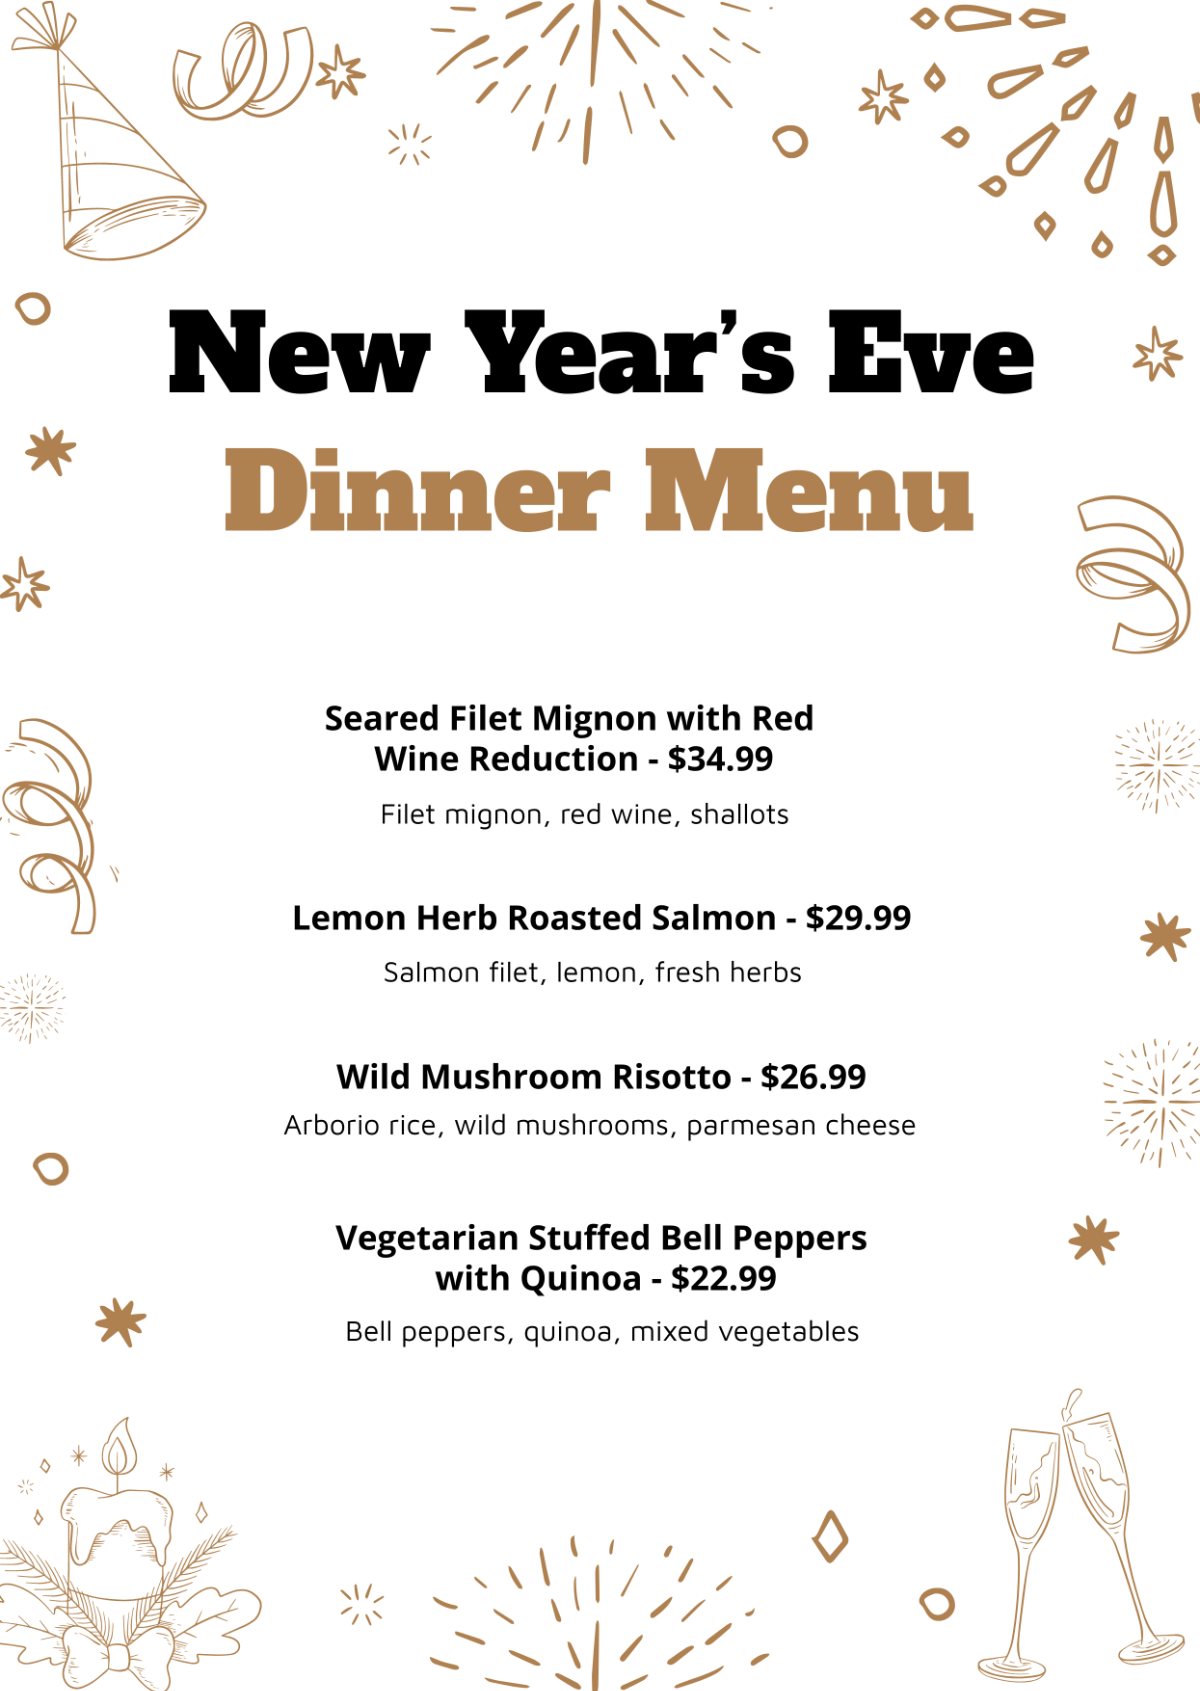 New Year's Eve Dinner Menu Template